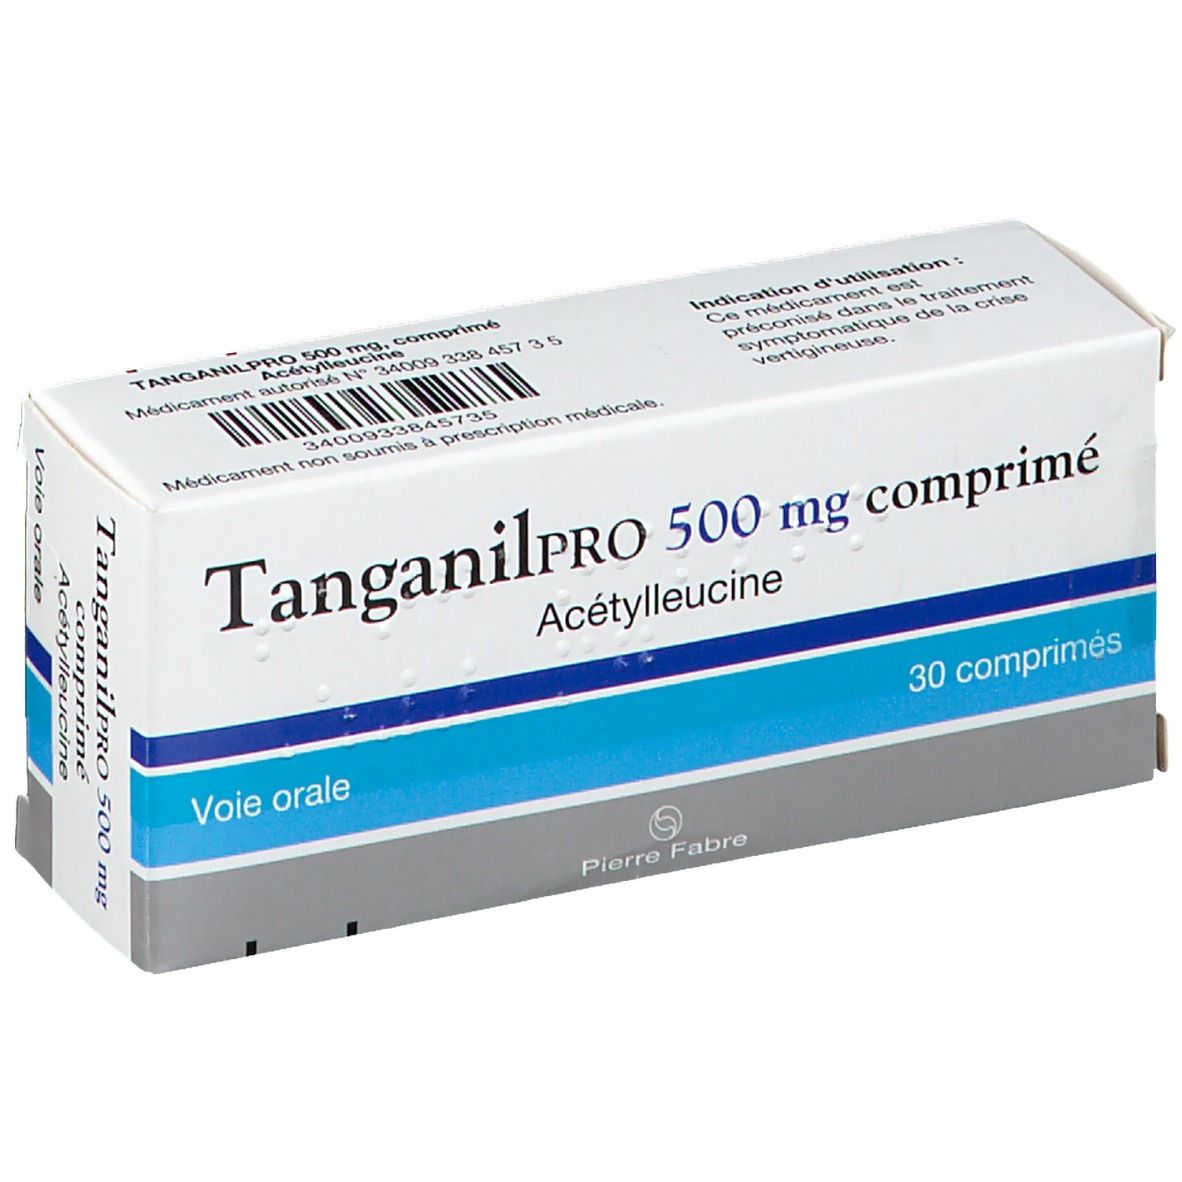 Pierre Fabre Tanganil Pro 500 mg